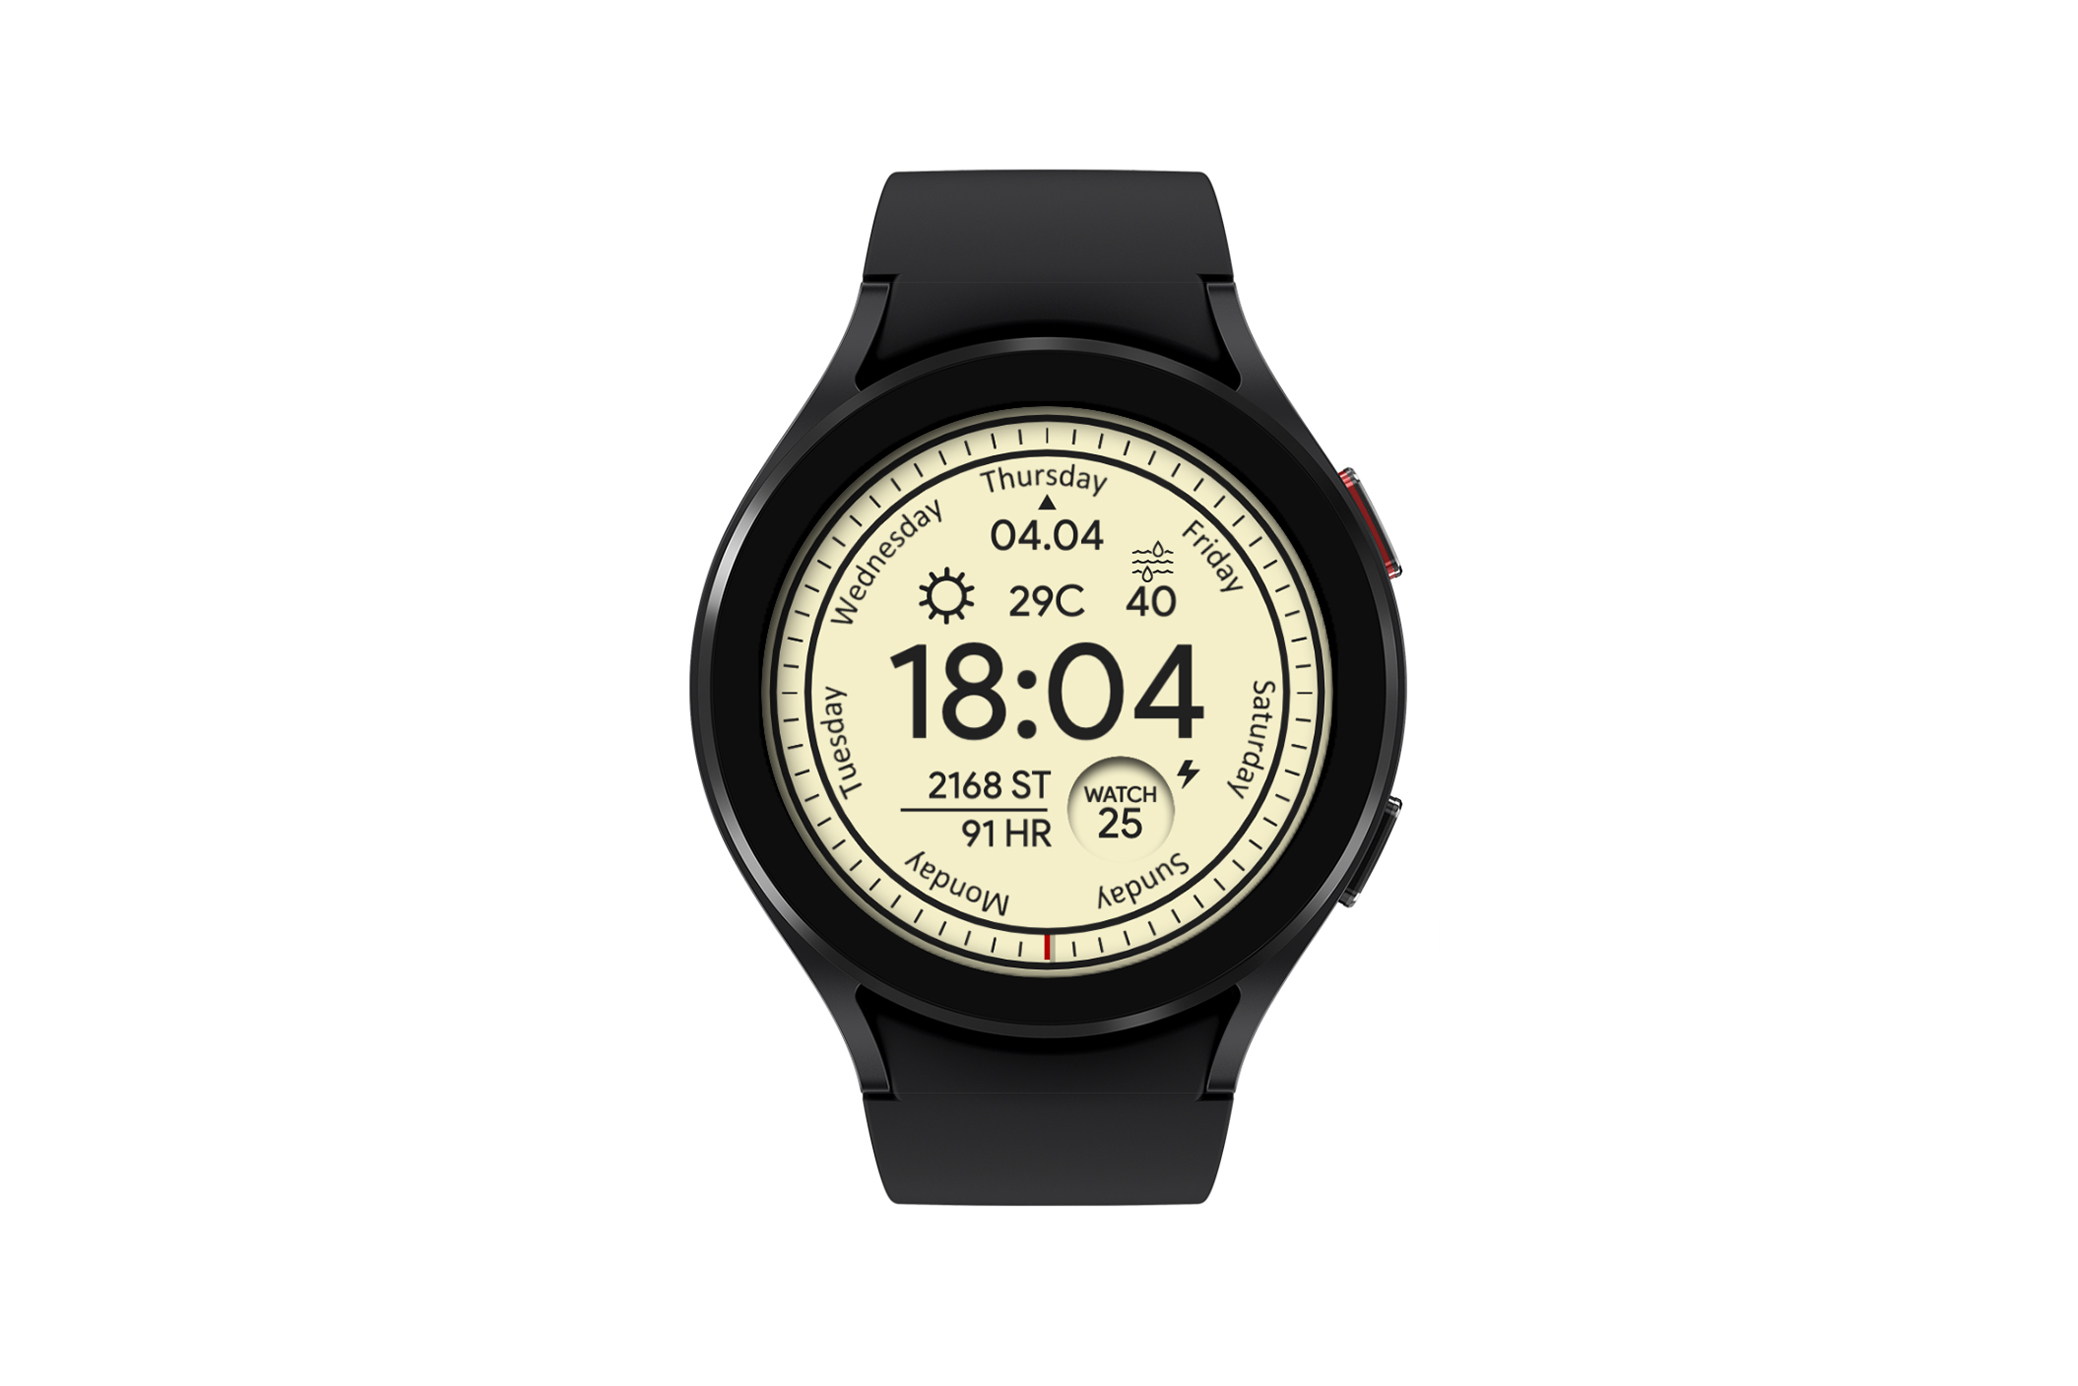 CLV-Dak Facer Wear OS watch face for Samsung Galaxy Watch.